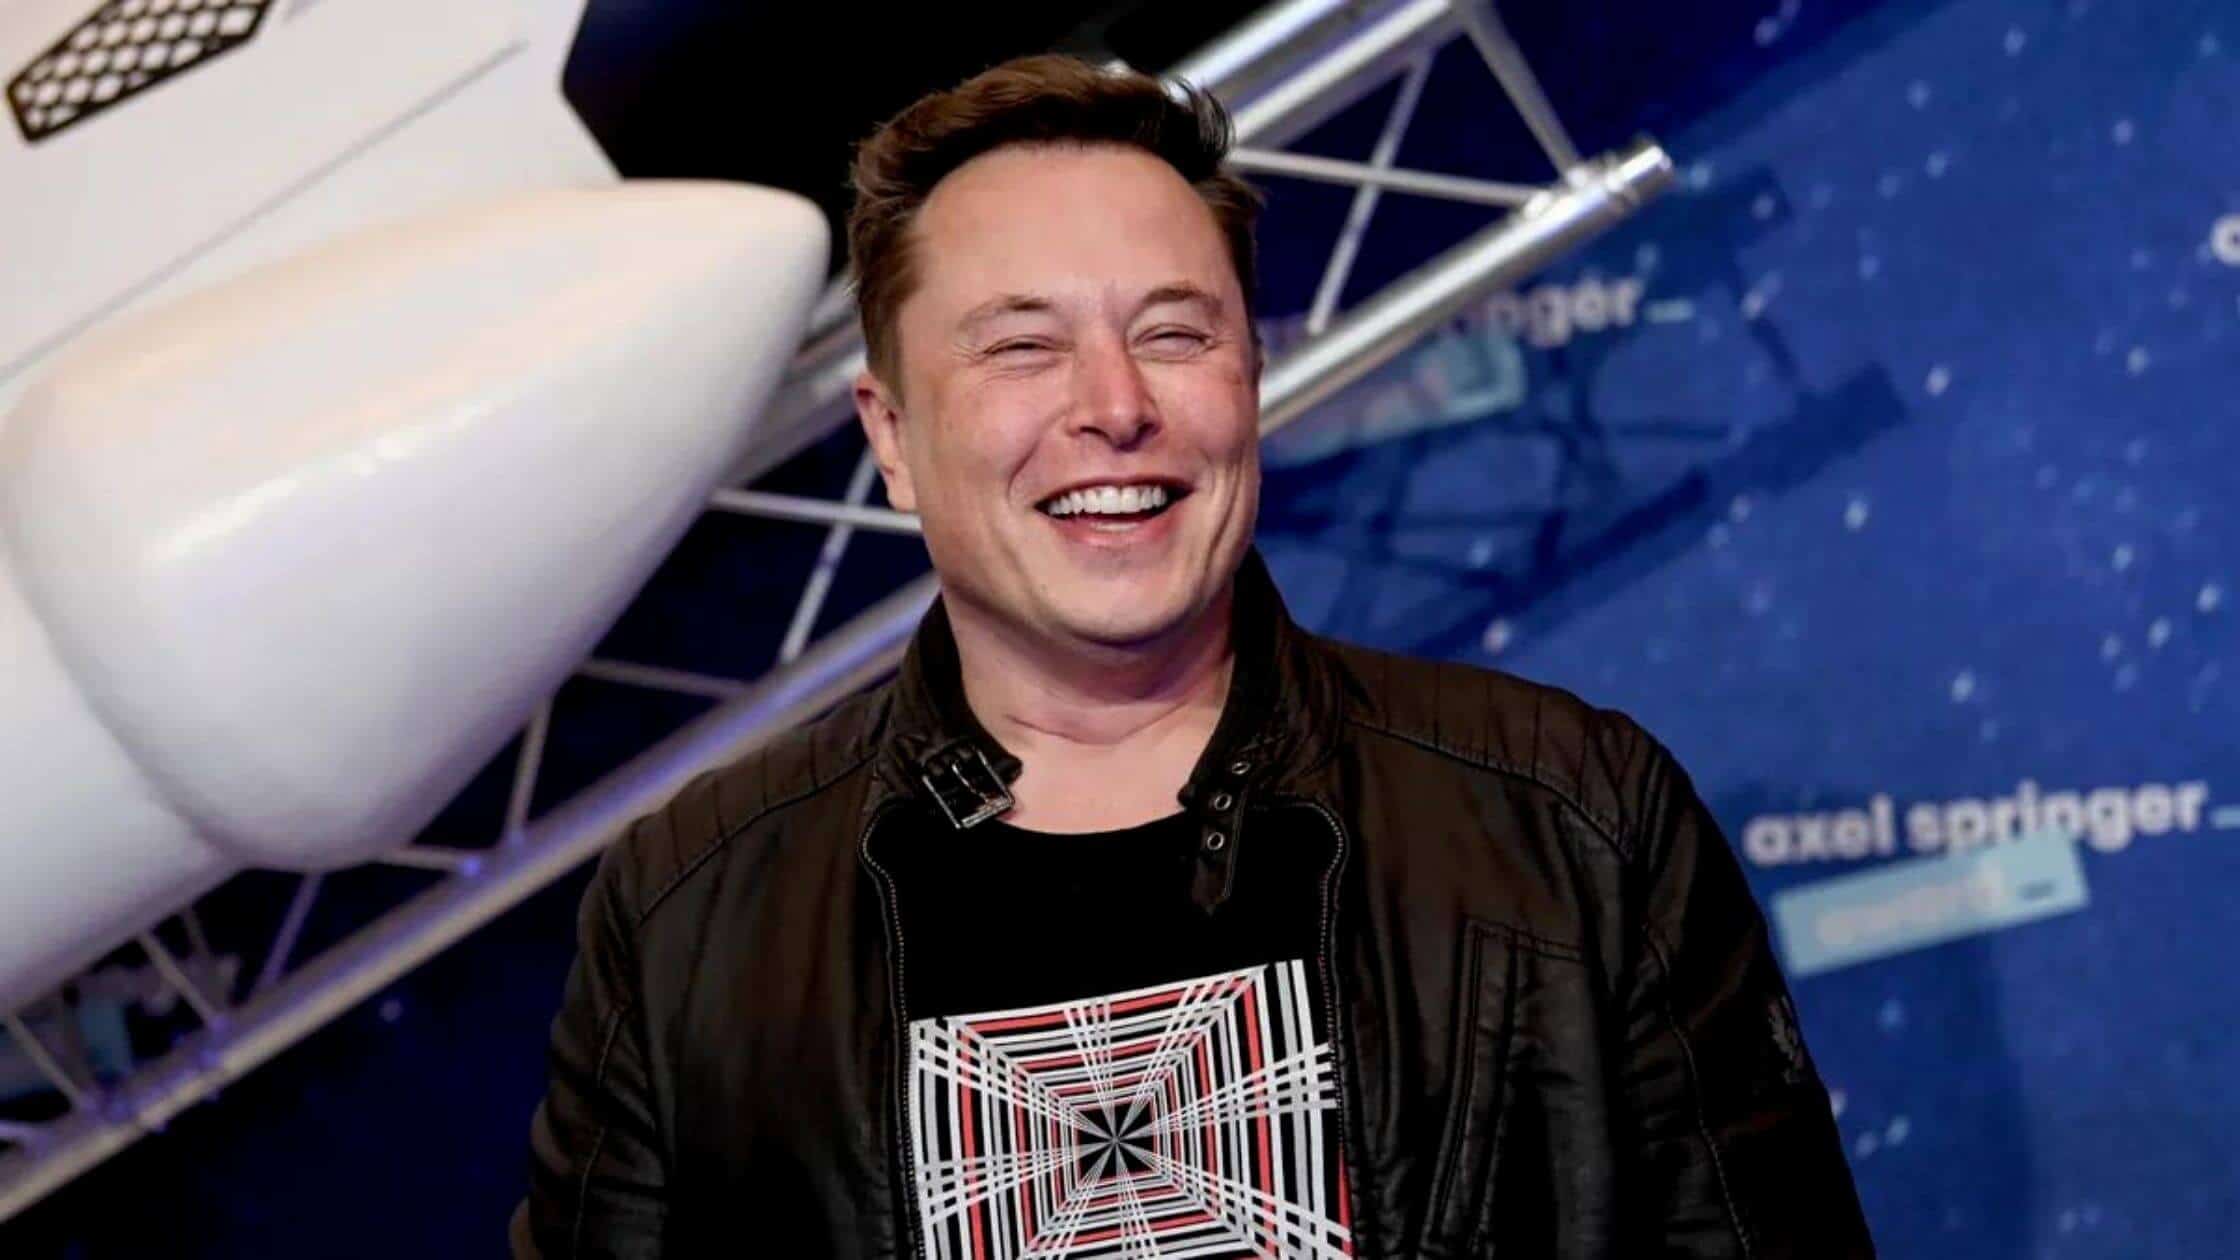 Elon Musk Recently Had Twins With A Neuralink Executive Shivon Zilis